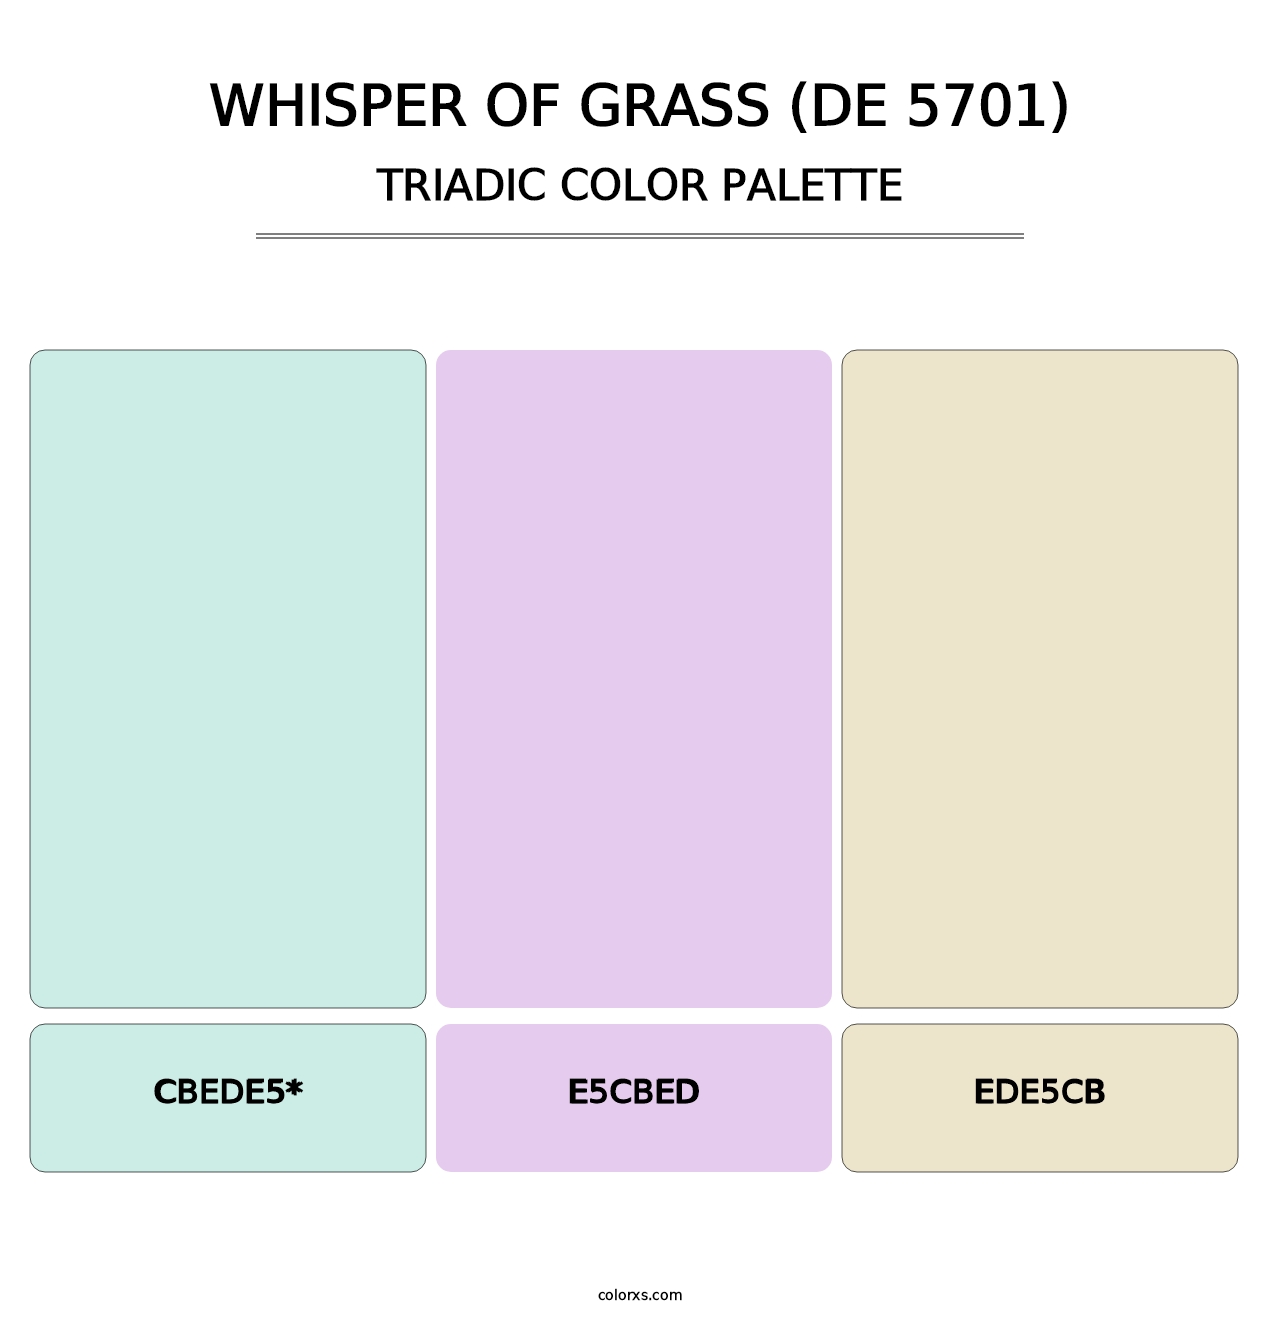 Whisper of Grass (DE 5701) - Triadic Color Palette